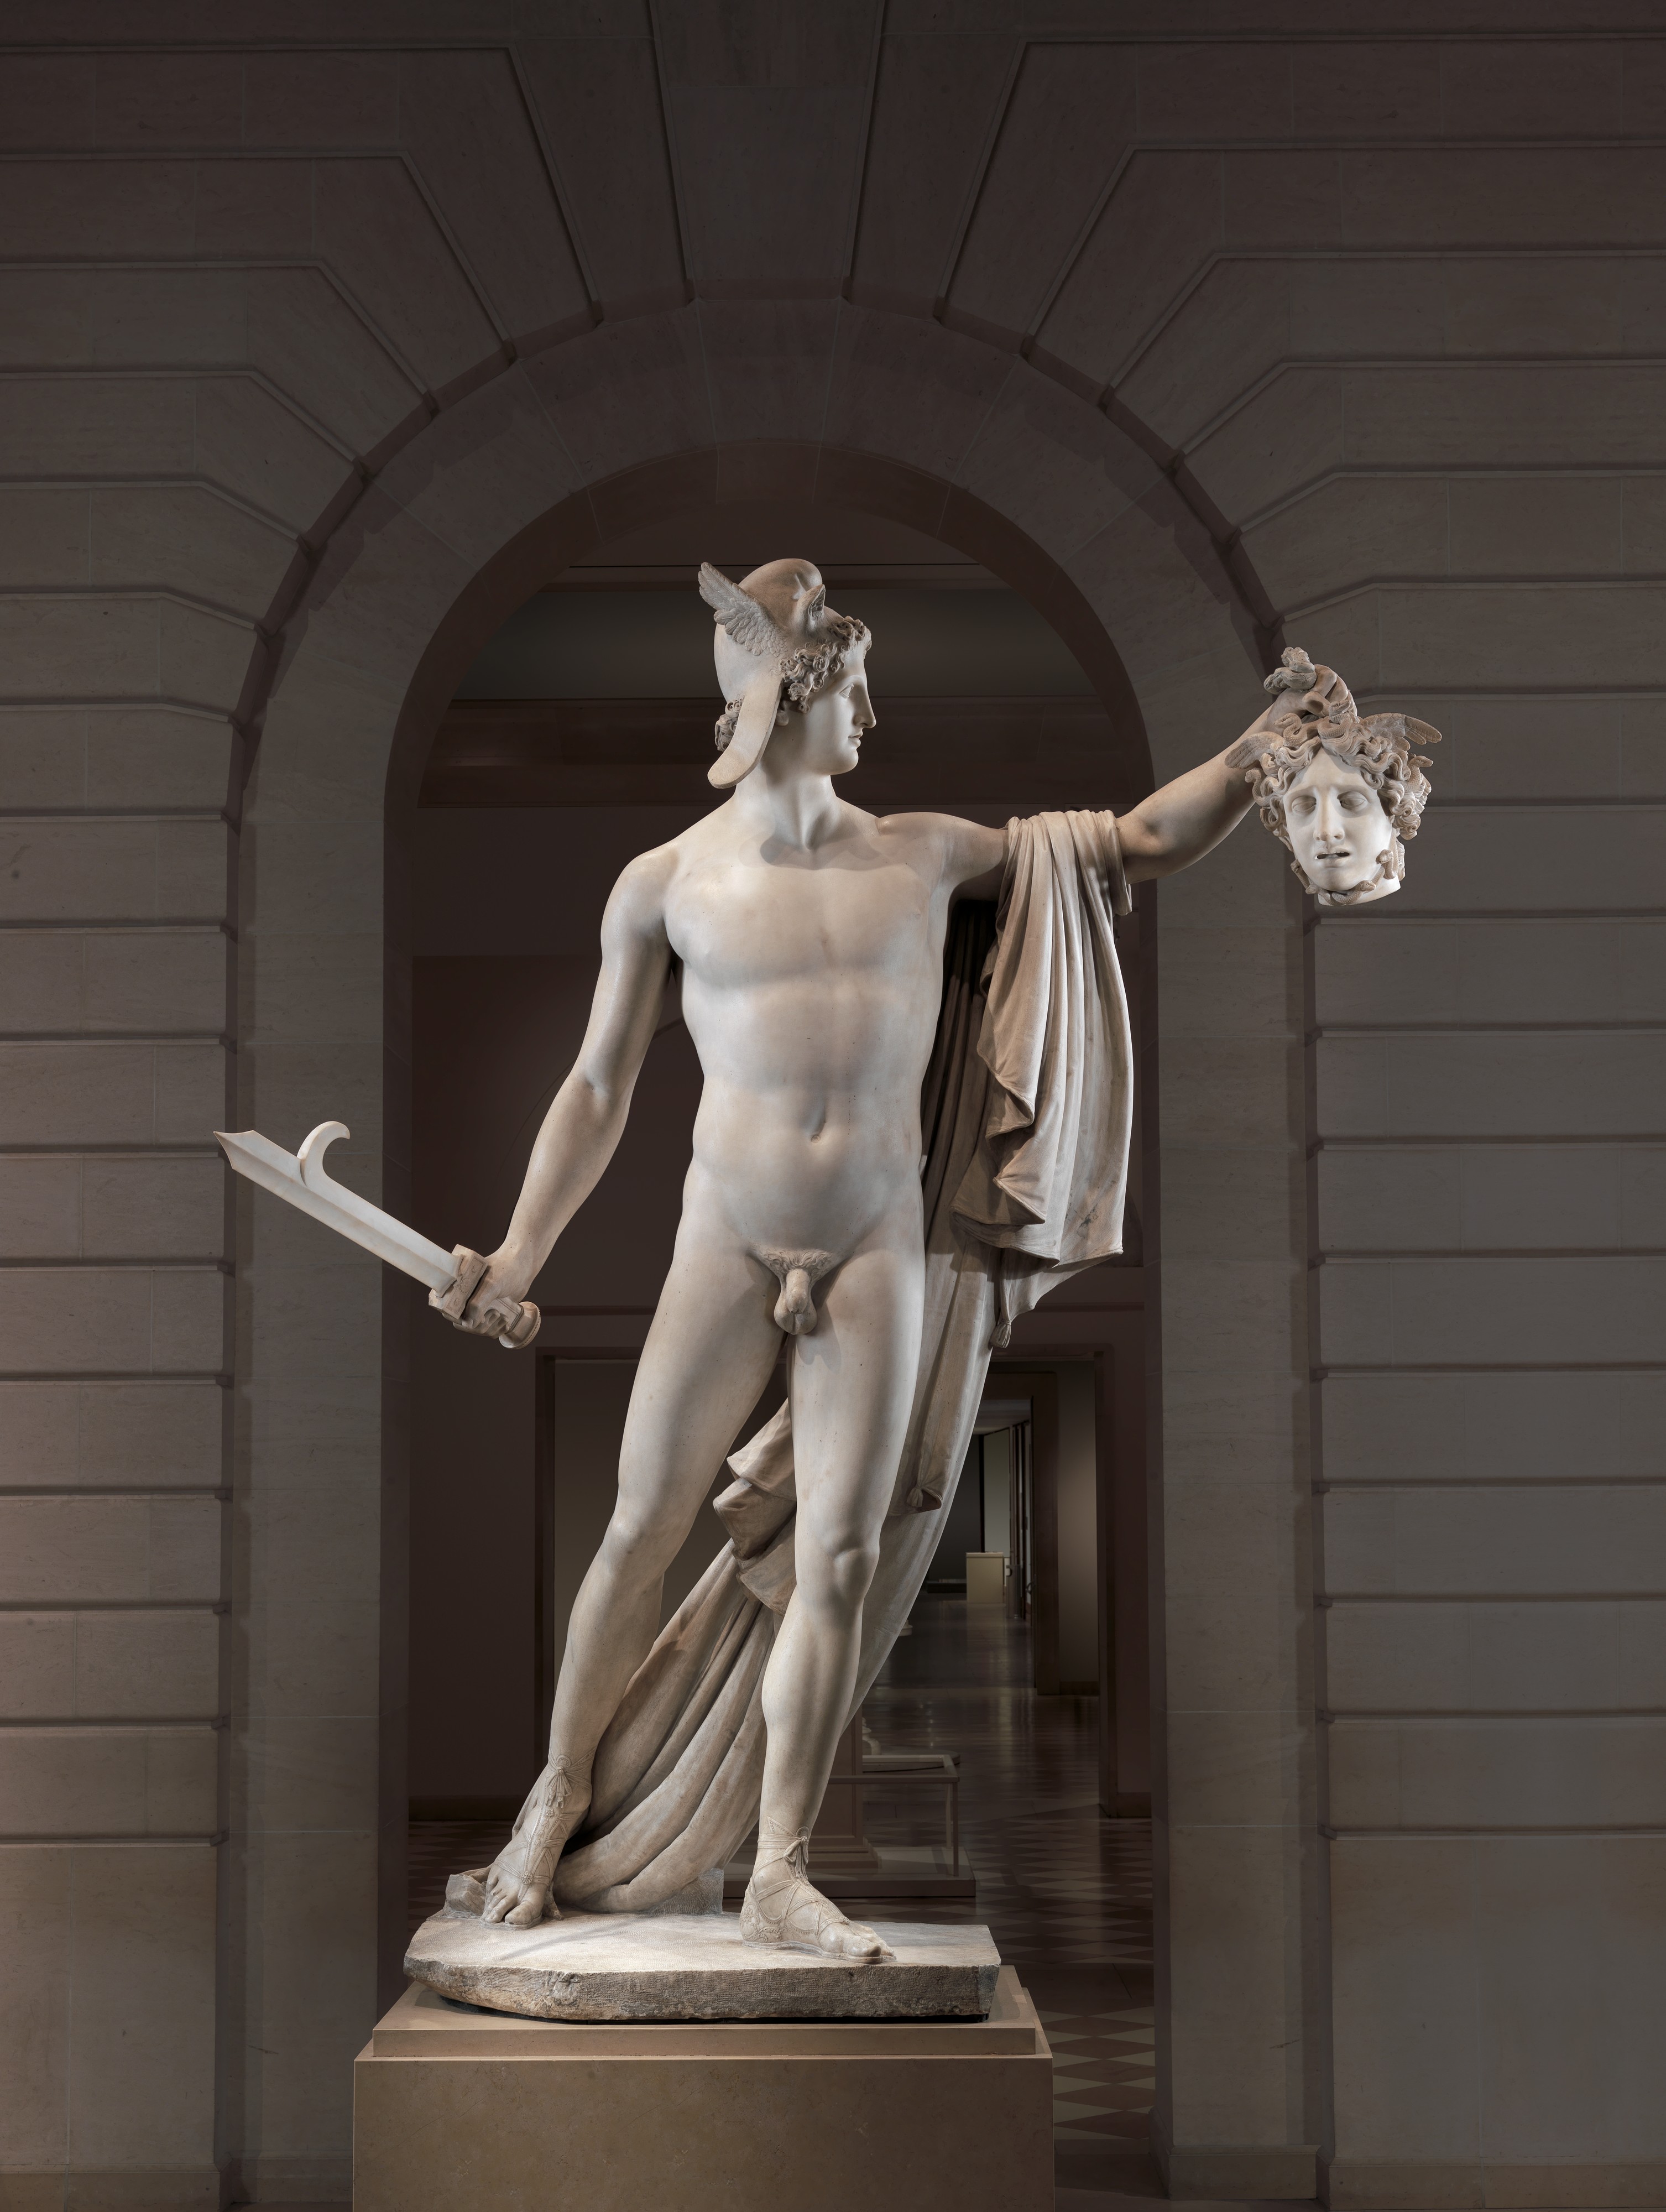 Nude Male Artworks on Display at The Metropolitan Museum